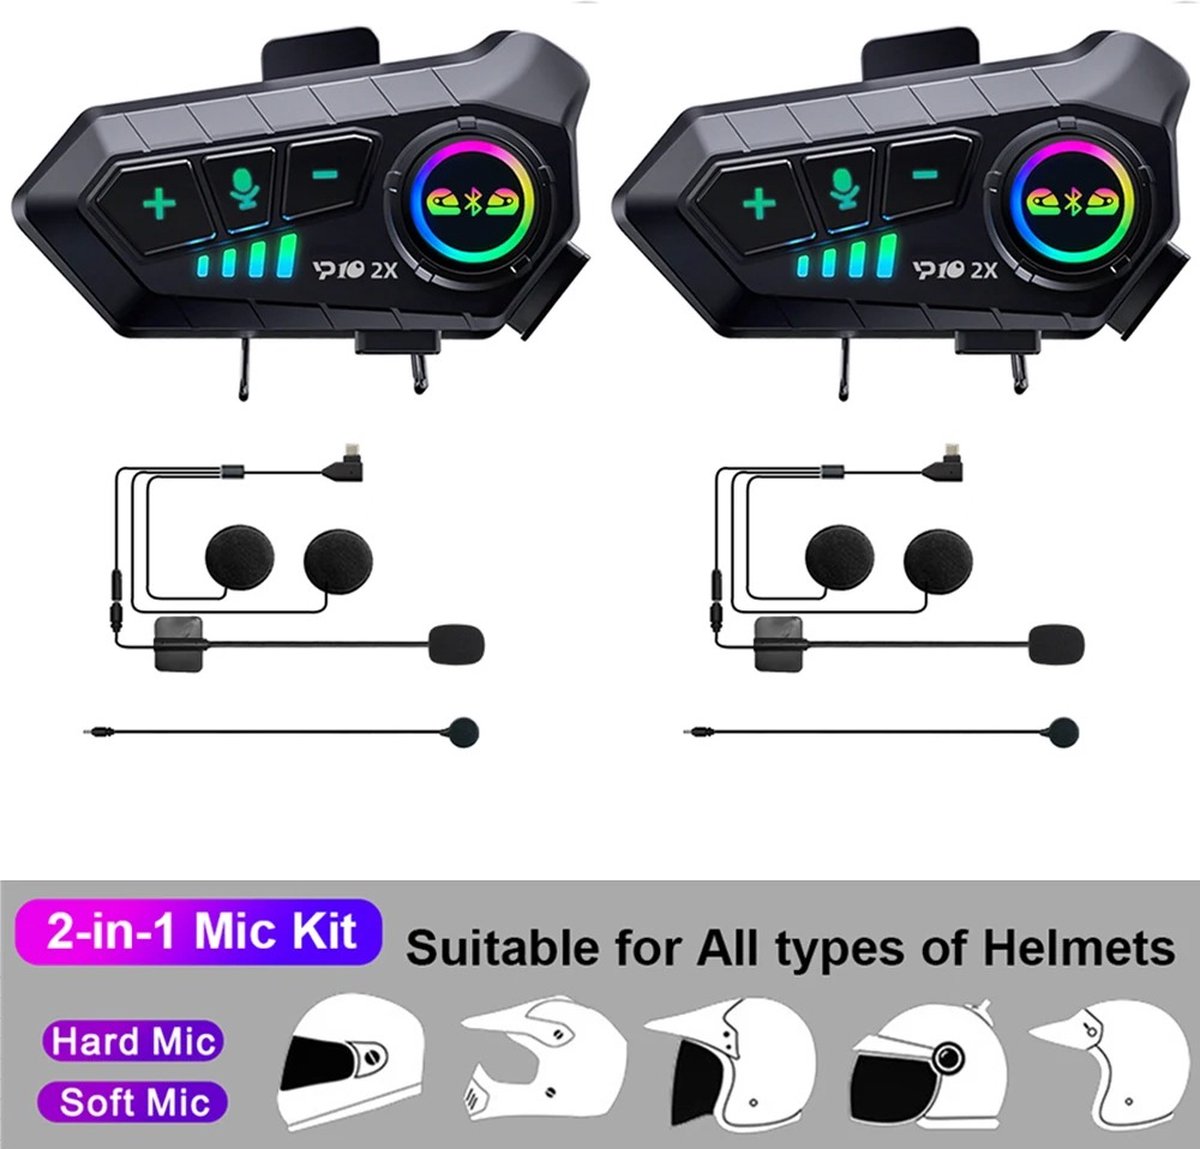 ShopbijStef - Motorhelm Headset - Helm Headset - Bluetooth Headset - Draadloze Oortelefoon - Waterdicht - Twee stuks